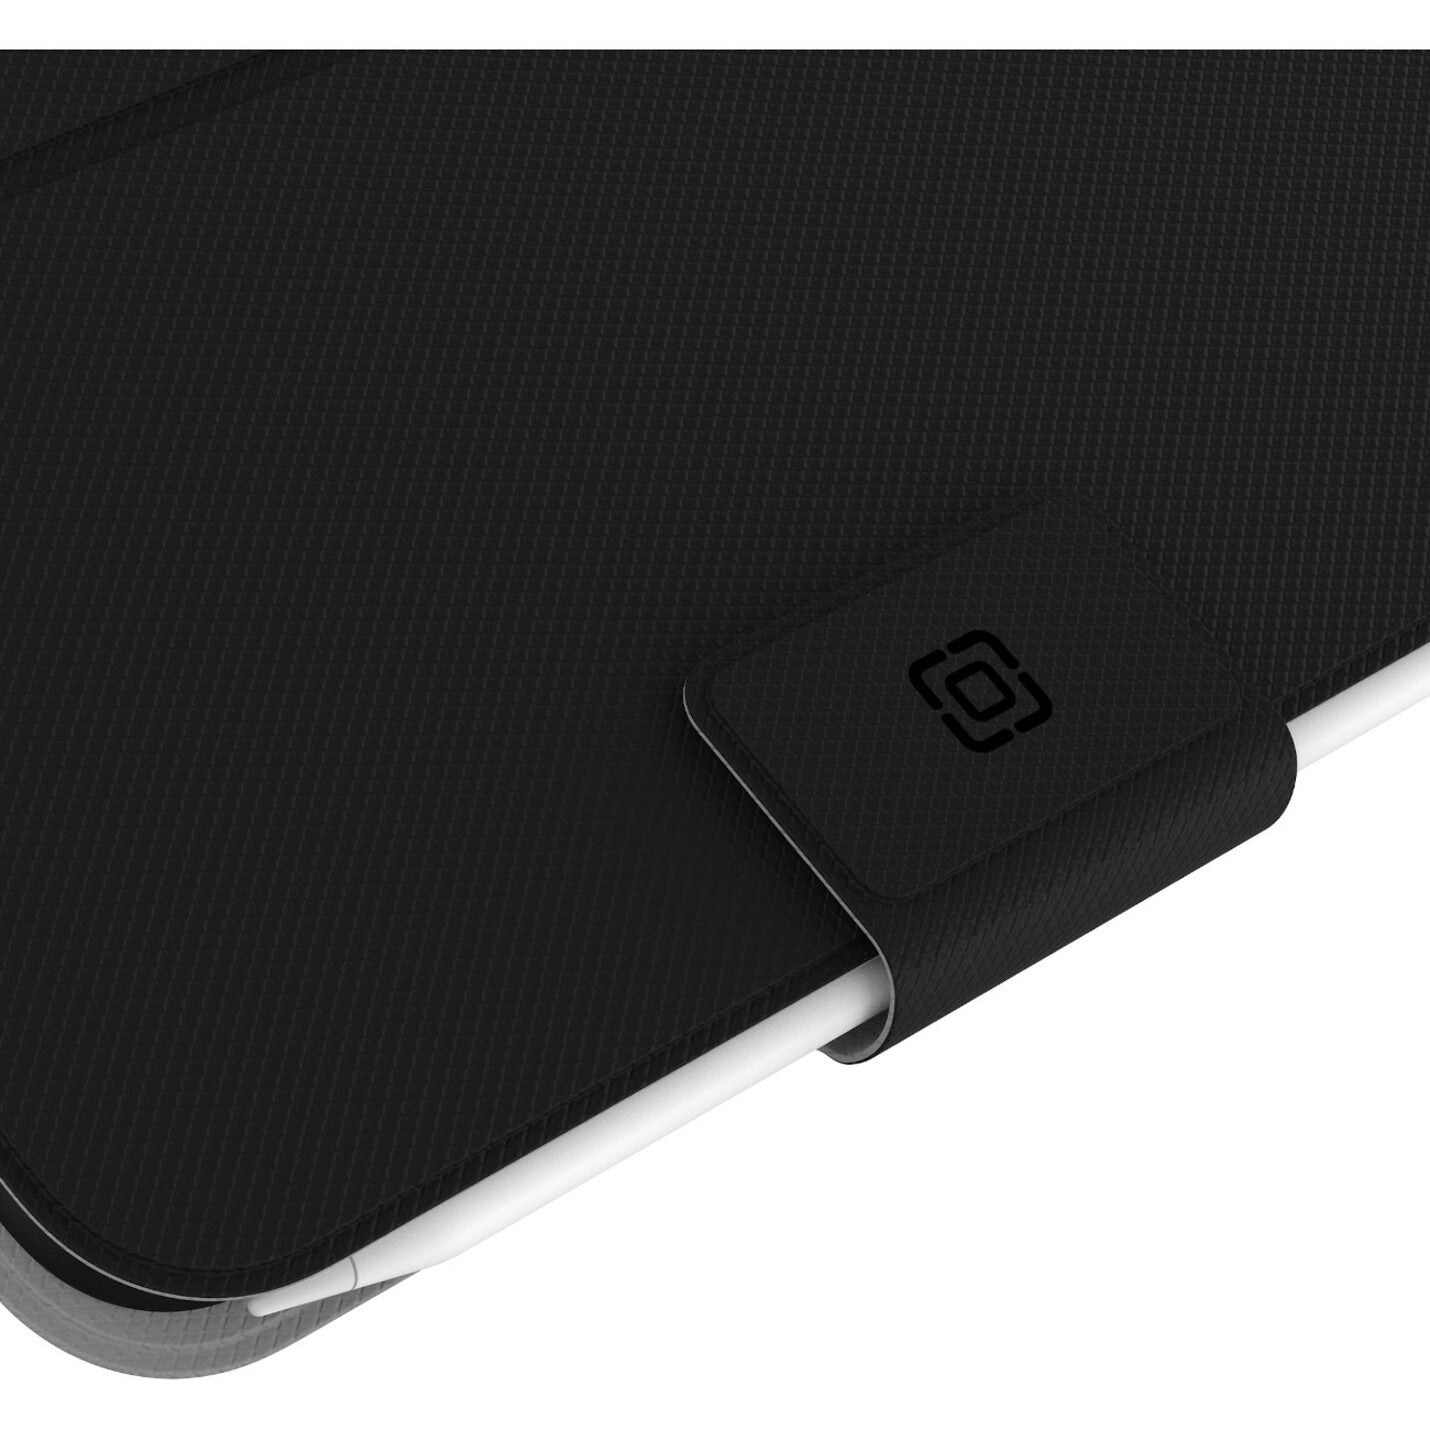 Incipio SureView Carrying Case (Folio) Apple iPad mini (6th Generation) Tablet - Black